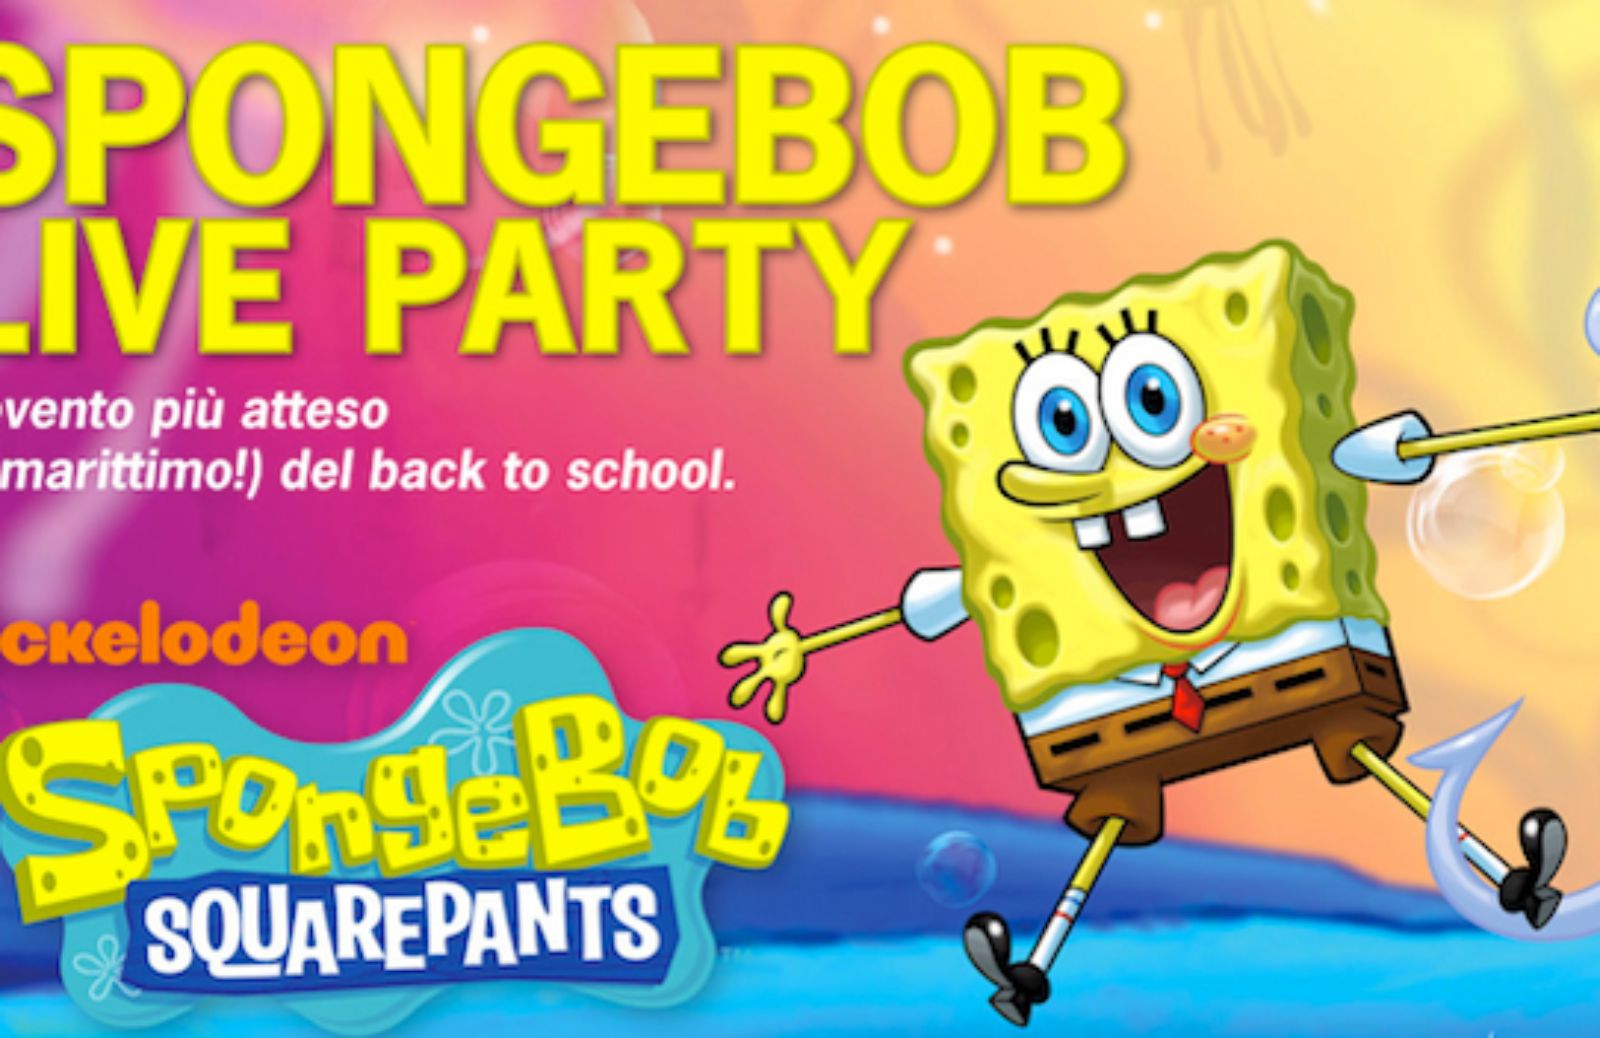 In arrivo al cinema SpongeBob live party